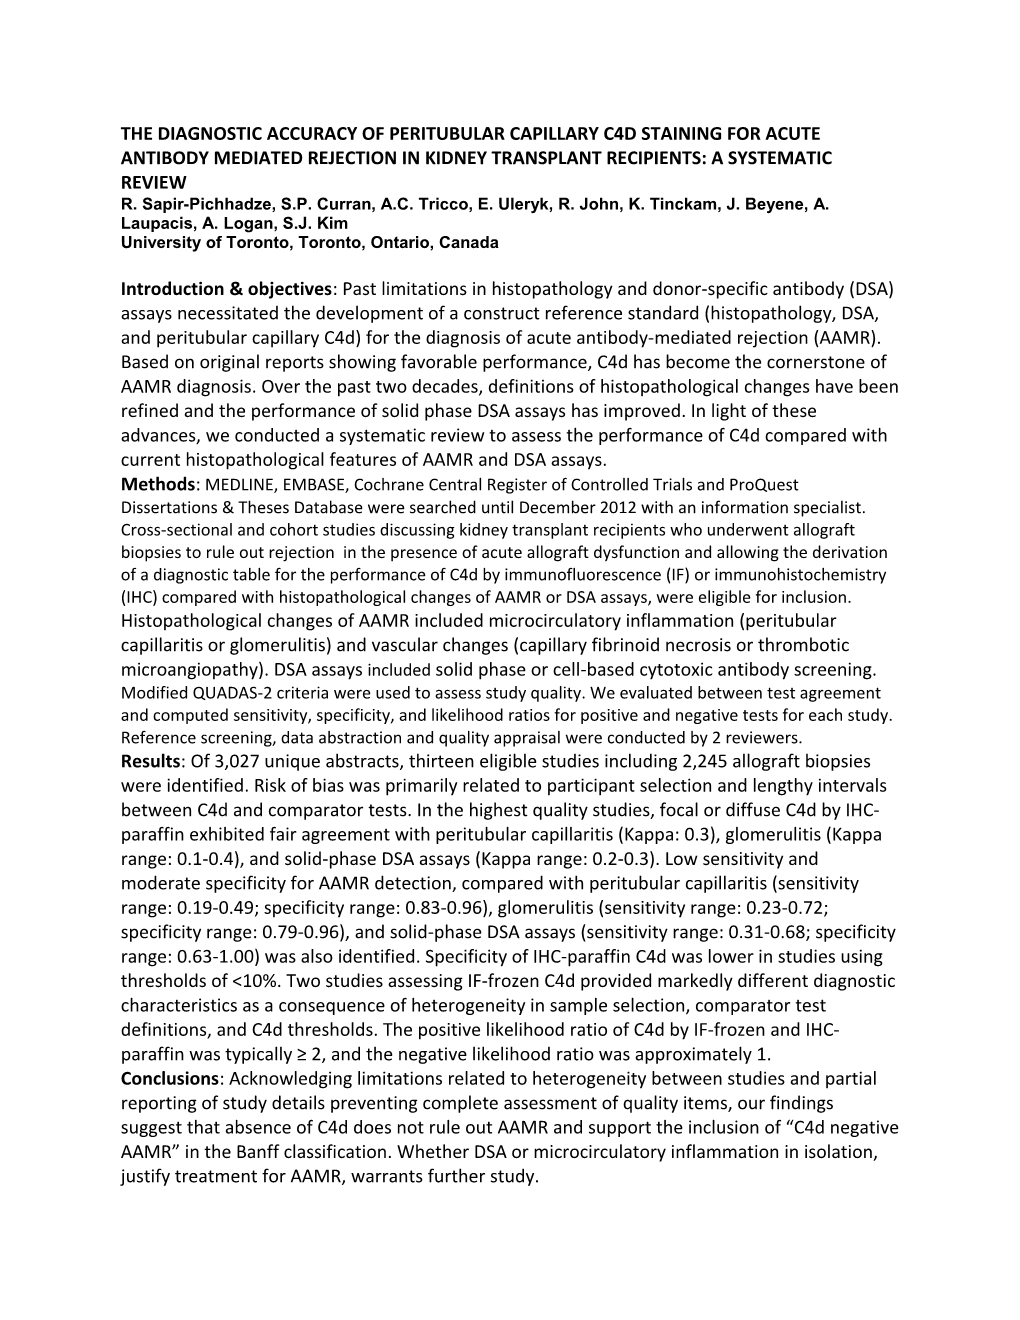 The Diagnostic Accuracy of Peritubular Capillary C4d Staining for Acute Antibody Mediated